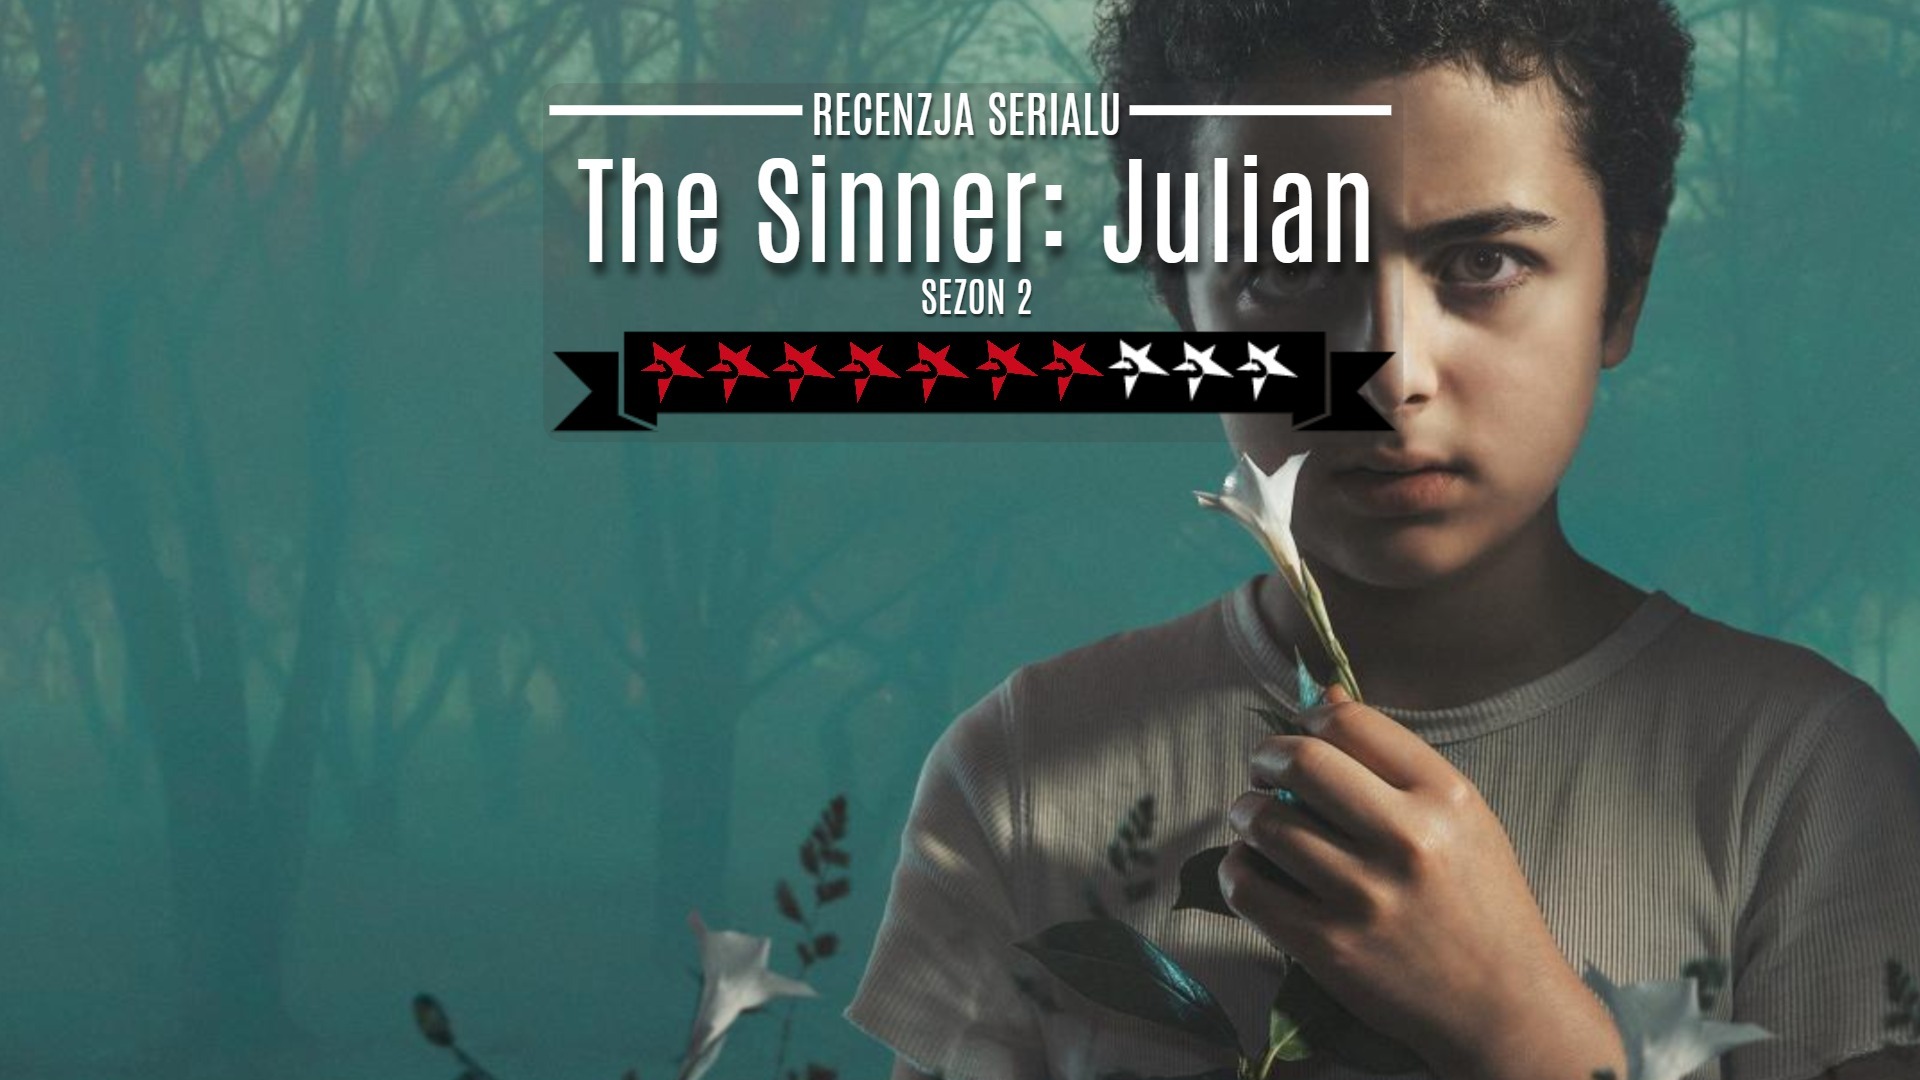 the sinner julian serial netflix recenzja serialu sezon 2